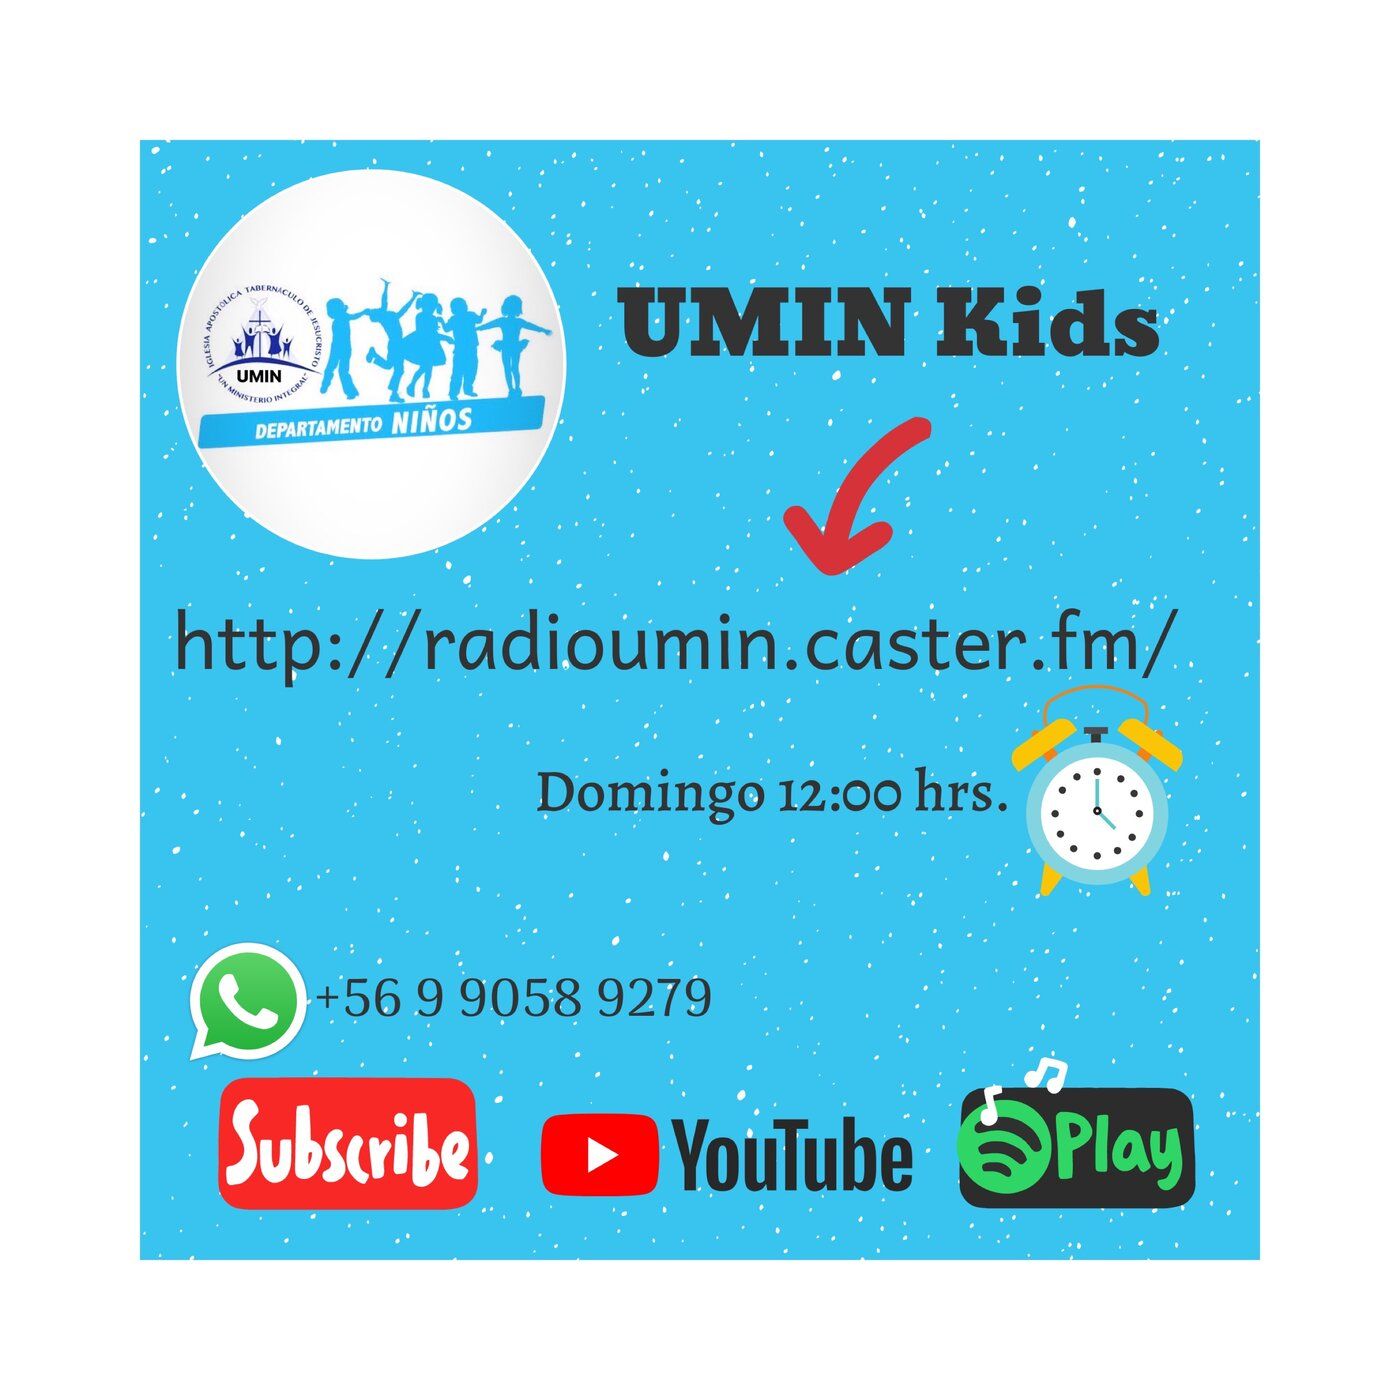 UMIN Kids 24-02-20 (online-audio-converter.com)